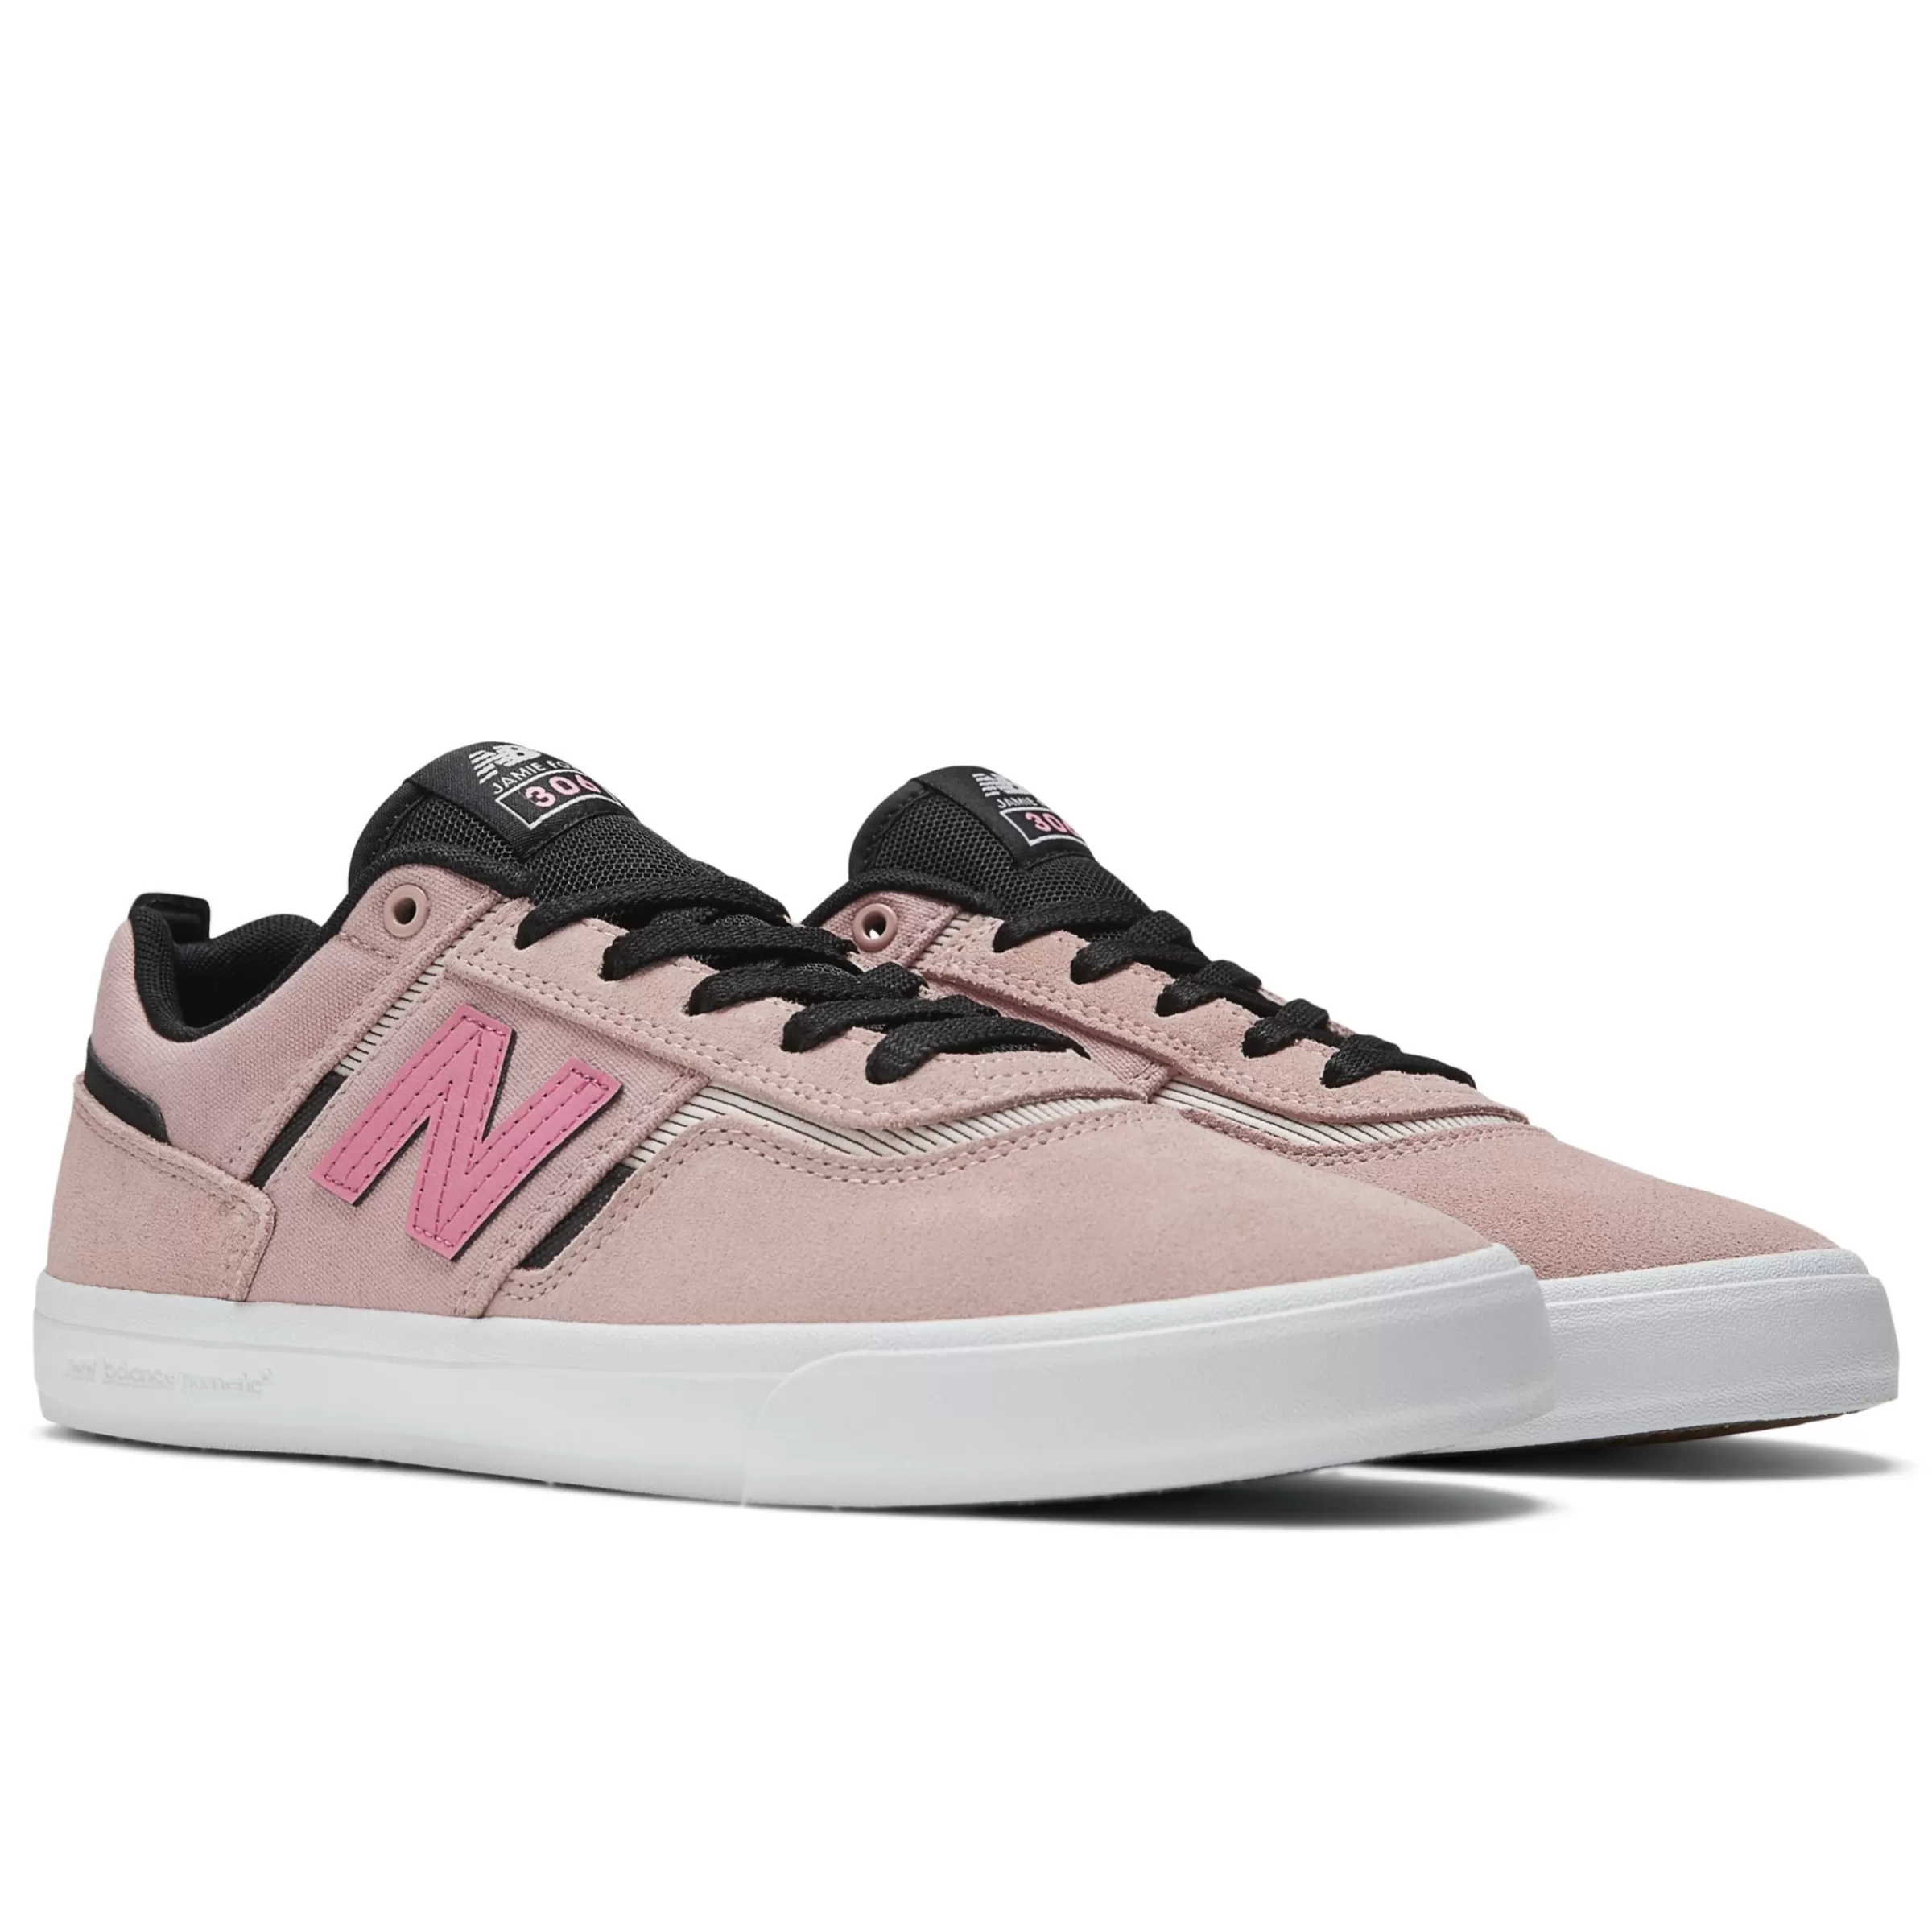 New Balance Chaussures Soldes-NBNumericJamieFoy306 Pink avec Black